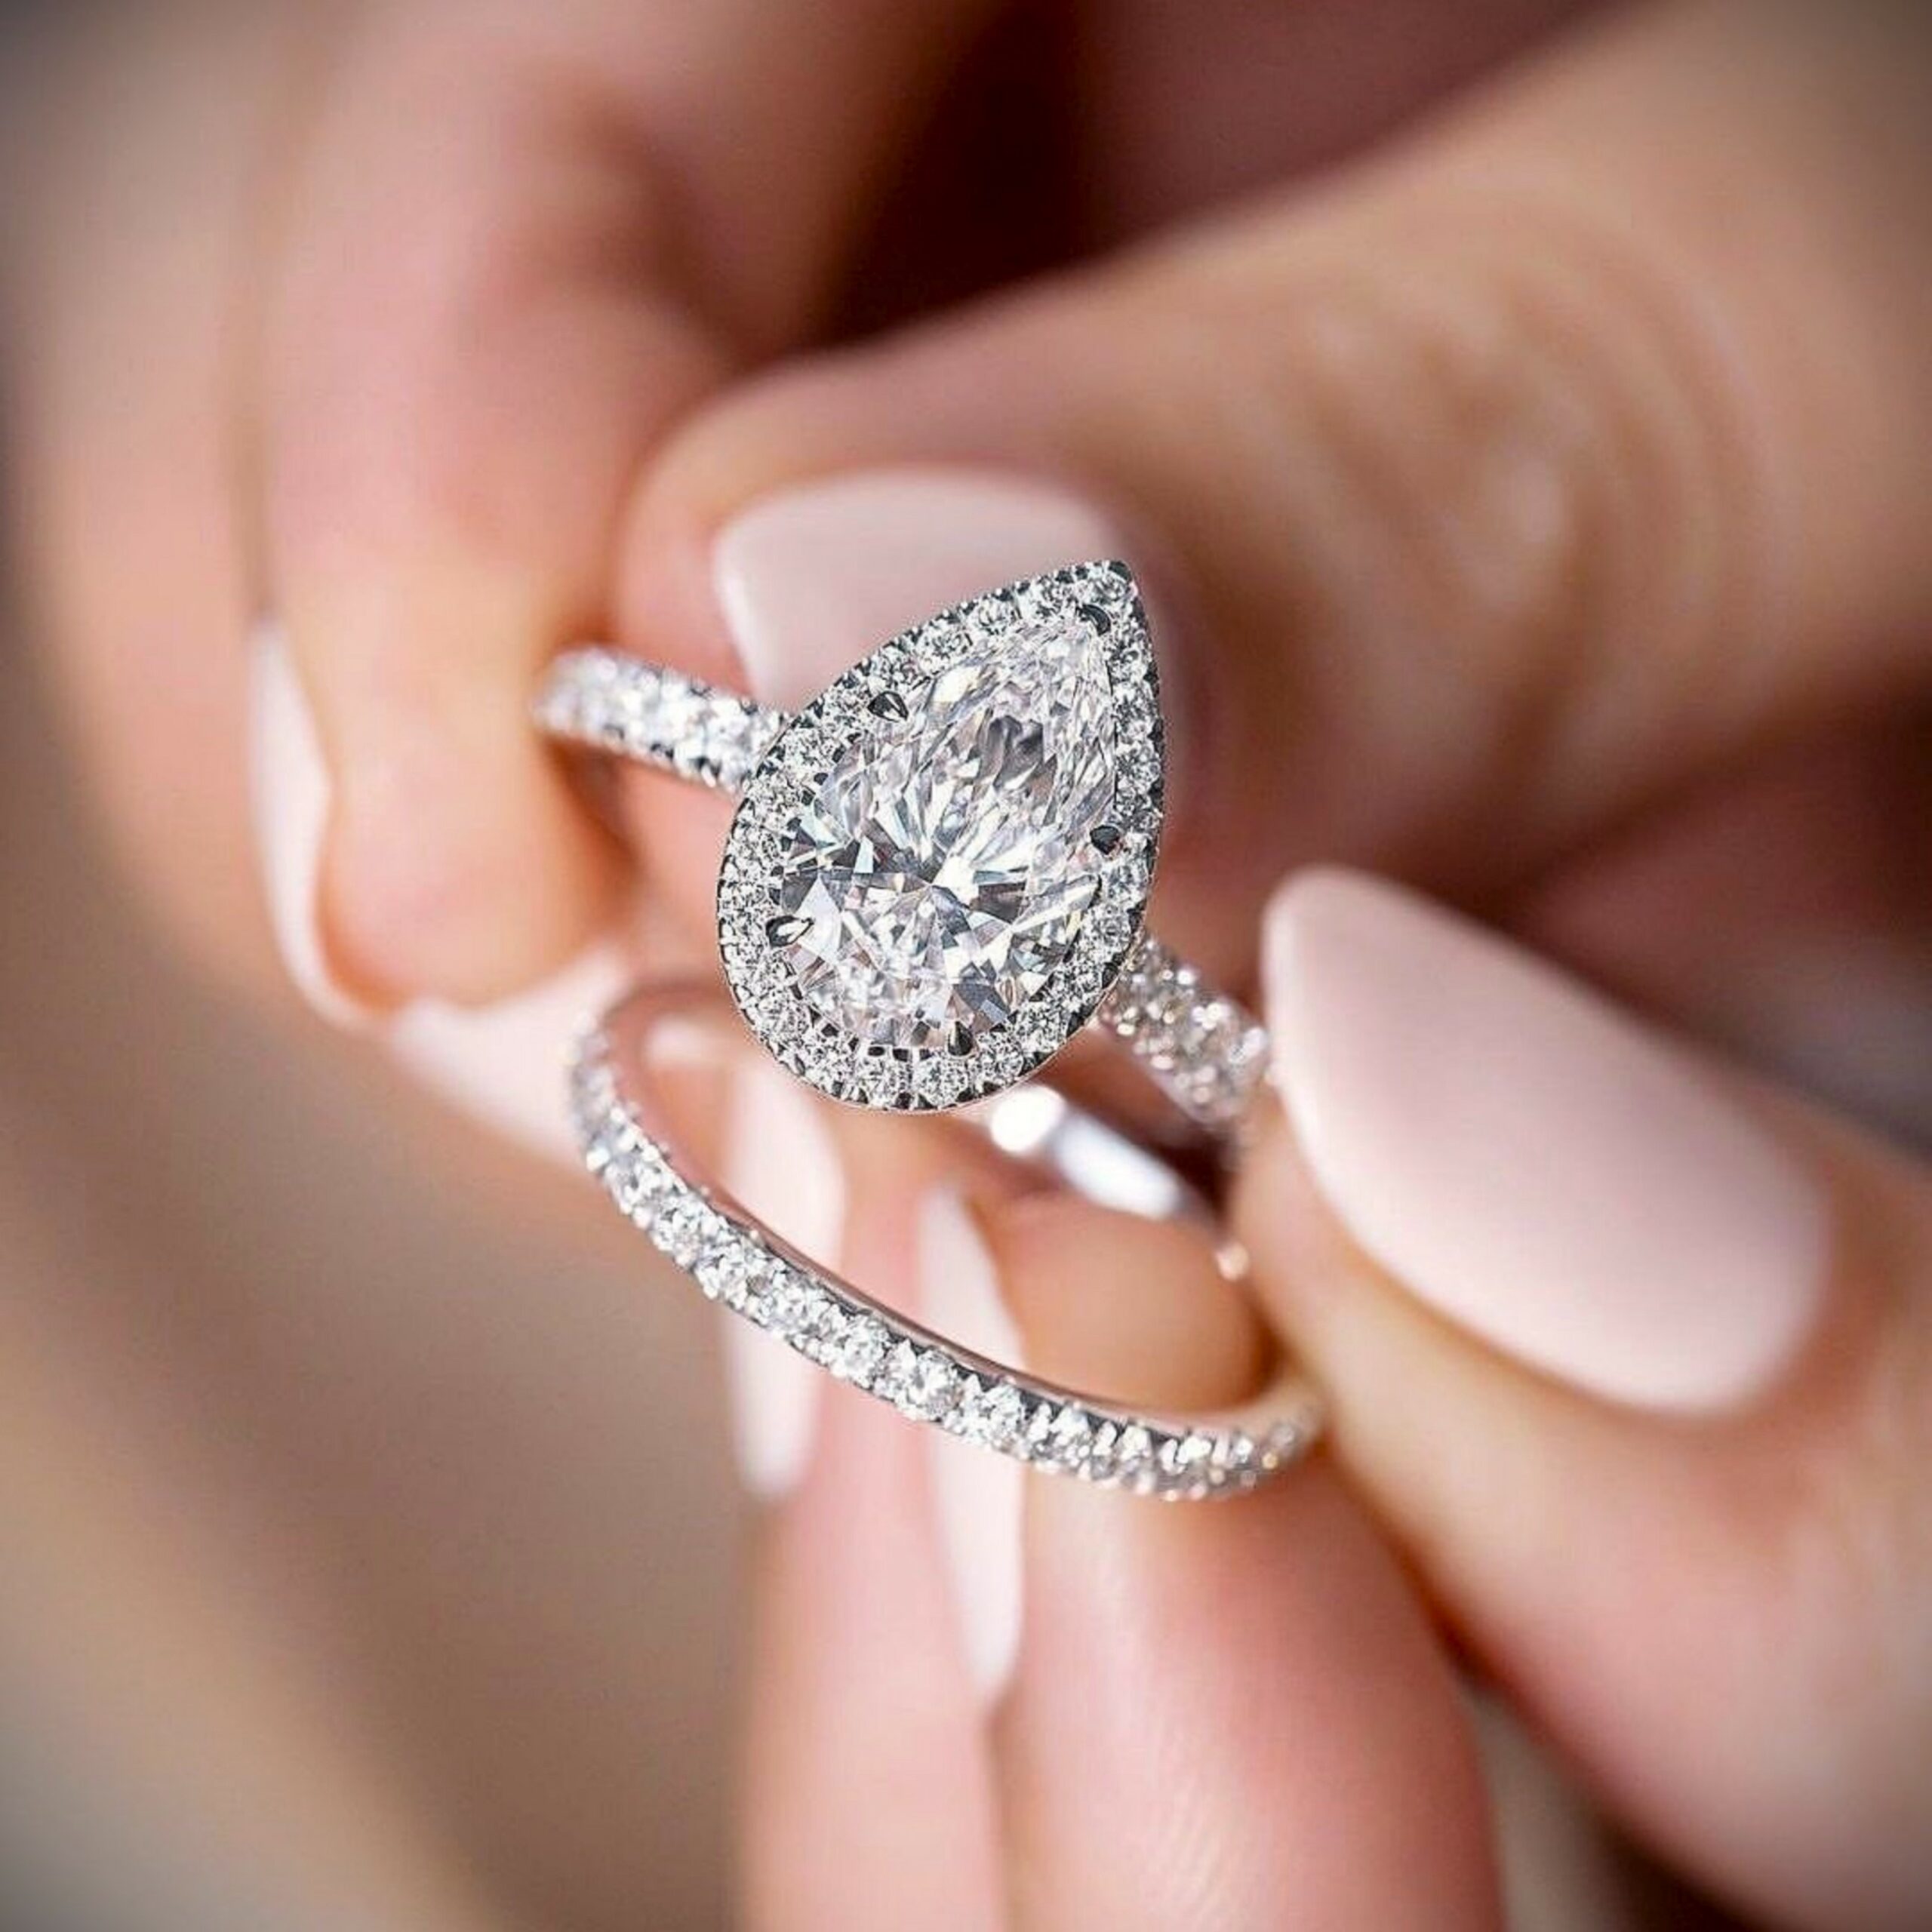 Diamond Shapes | Diamond jewelry designs, Diamond, Engagement ring cuts